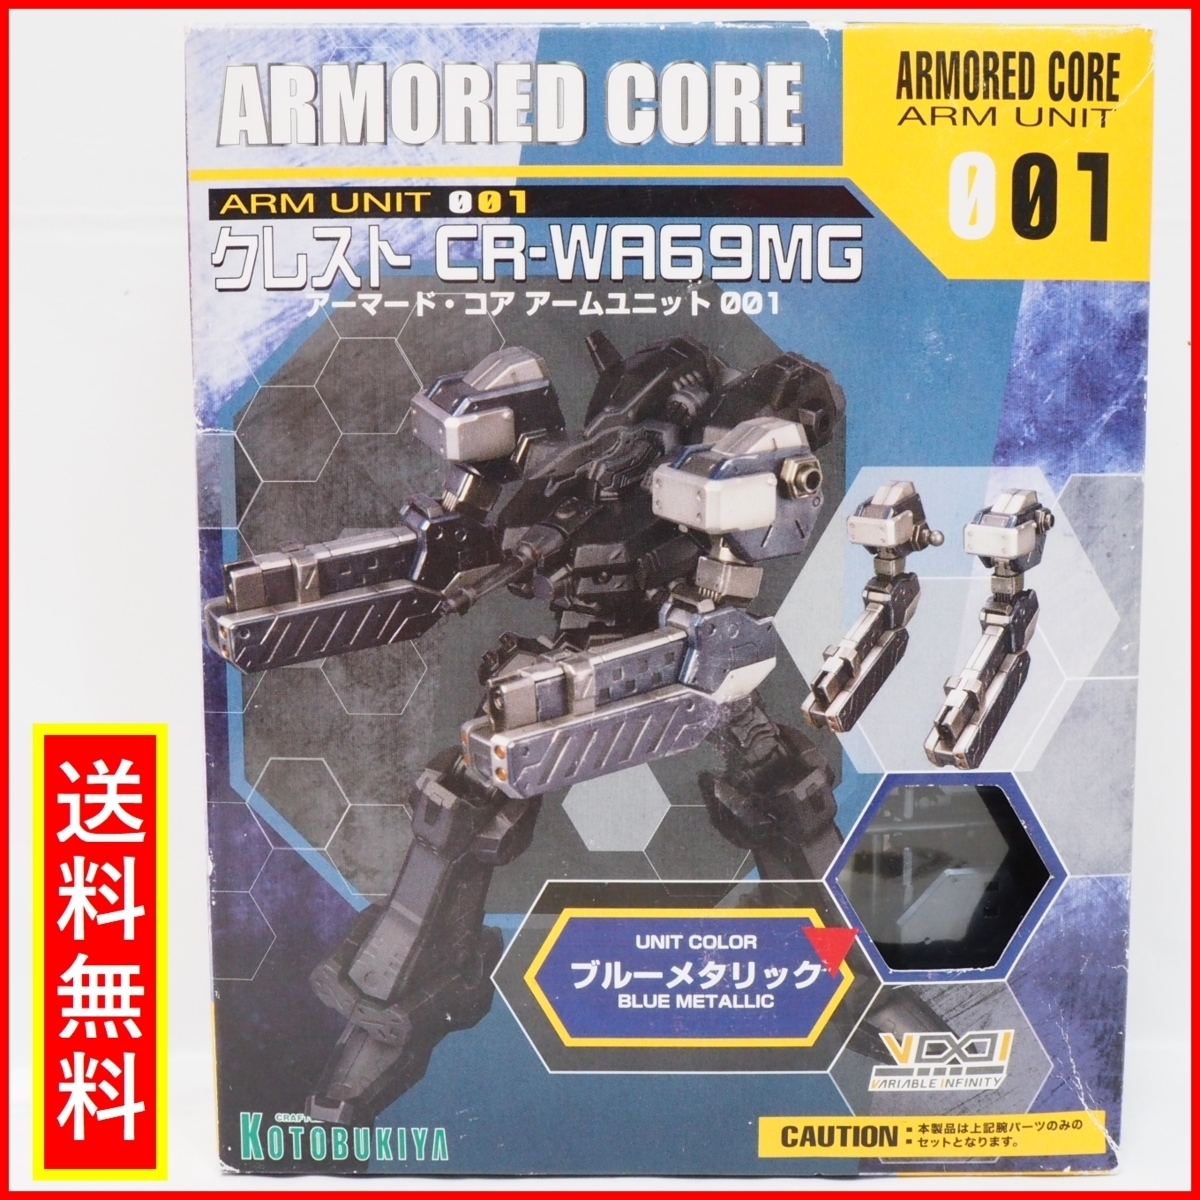  armor -do* core AA-01[ arm unit 001k rest CR-WA69MG blue metallic ] plastic model * Kotobukiya KOTOBUKIYA. shop [ not yet constructed ] including carriage 